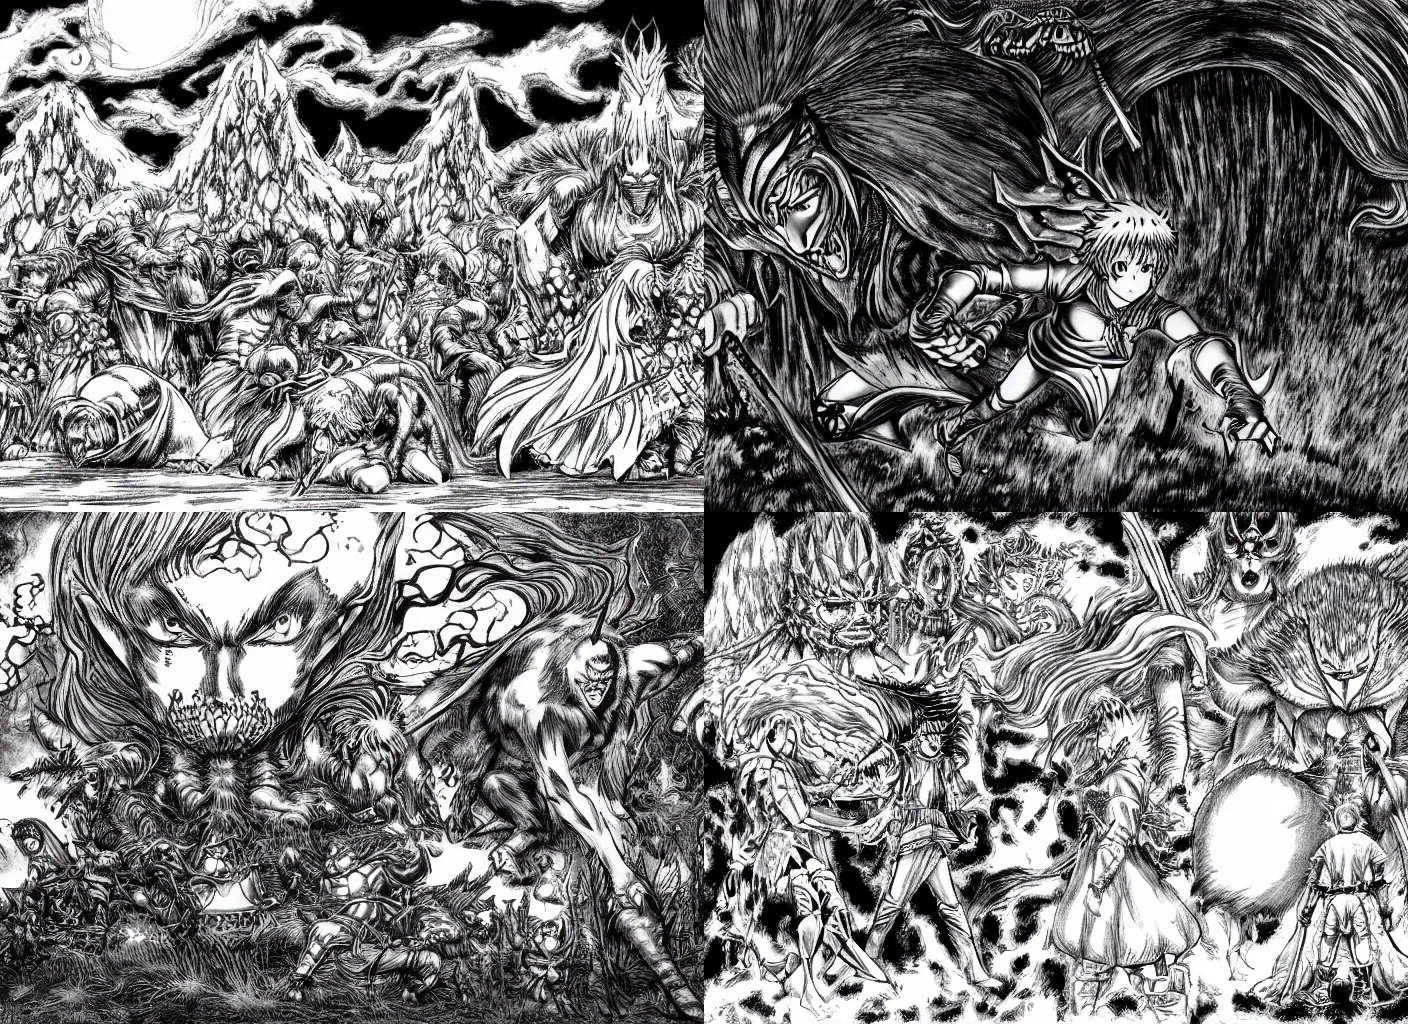 Prompt: A fantasy land by Kentaro Miura in the style of Berserk Manga, anime, manga